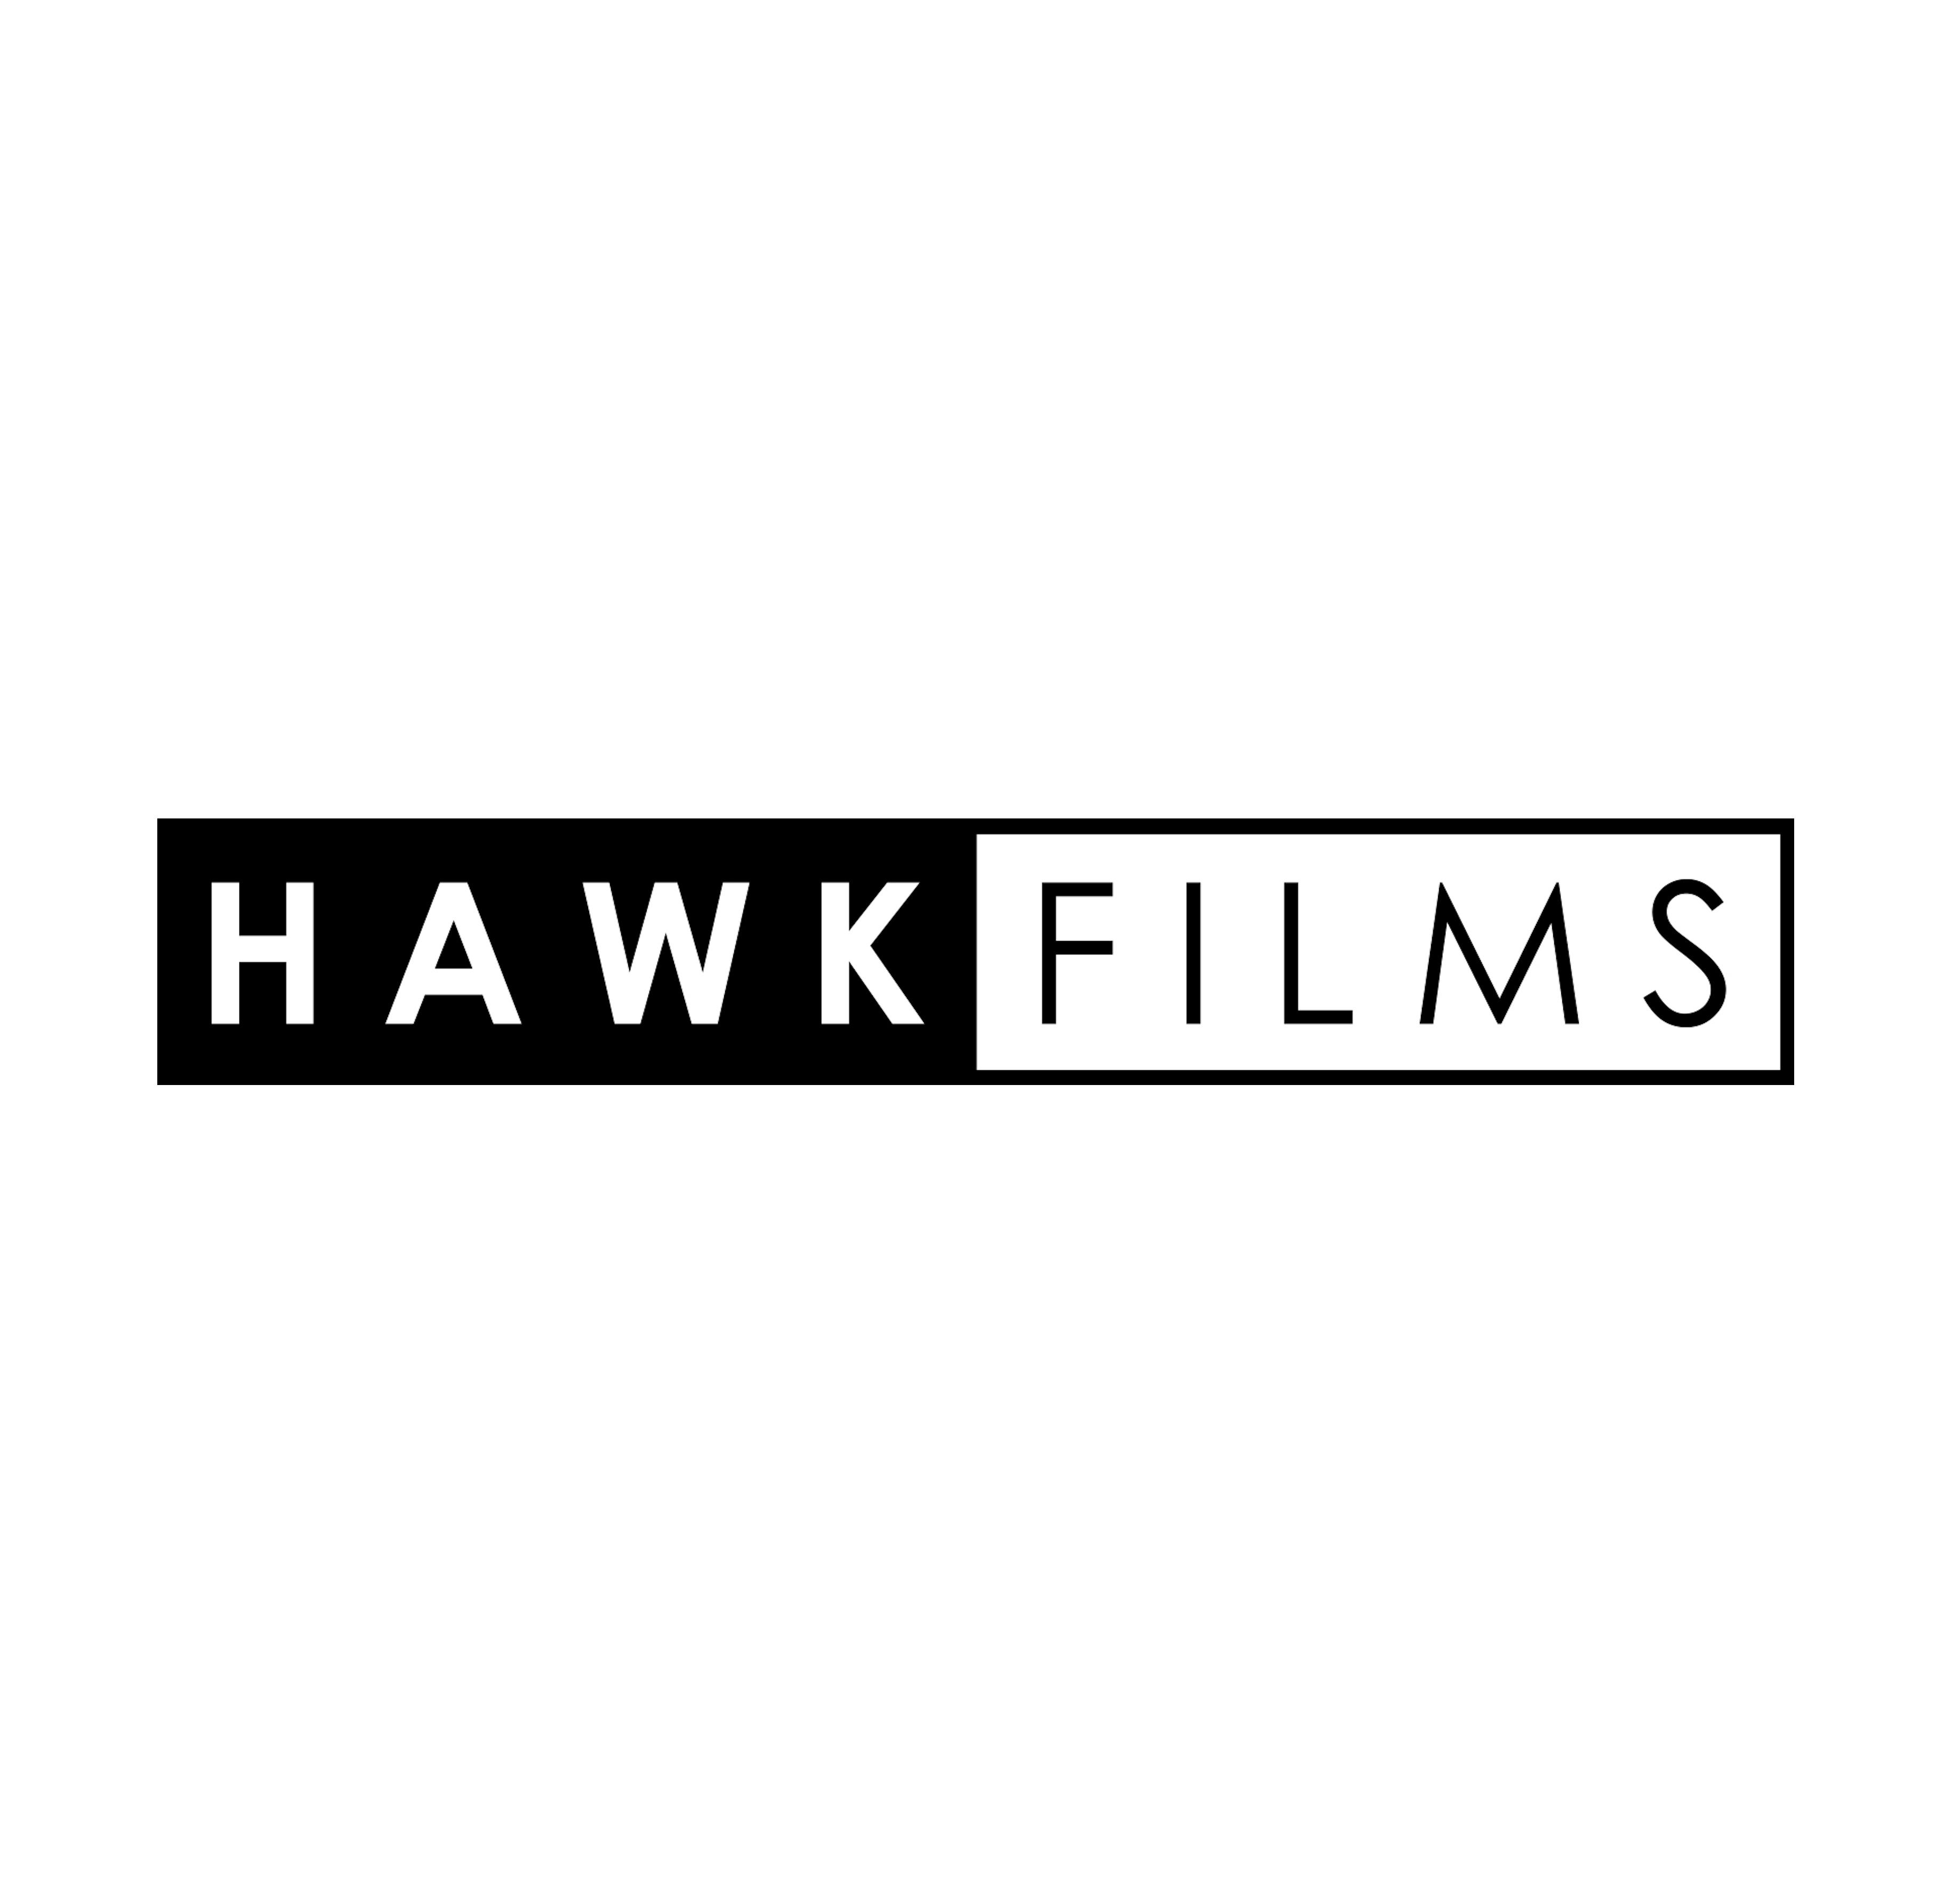 Hawk Films profile on Qualified.One